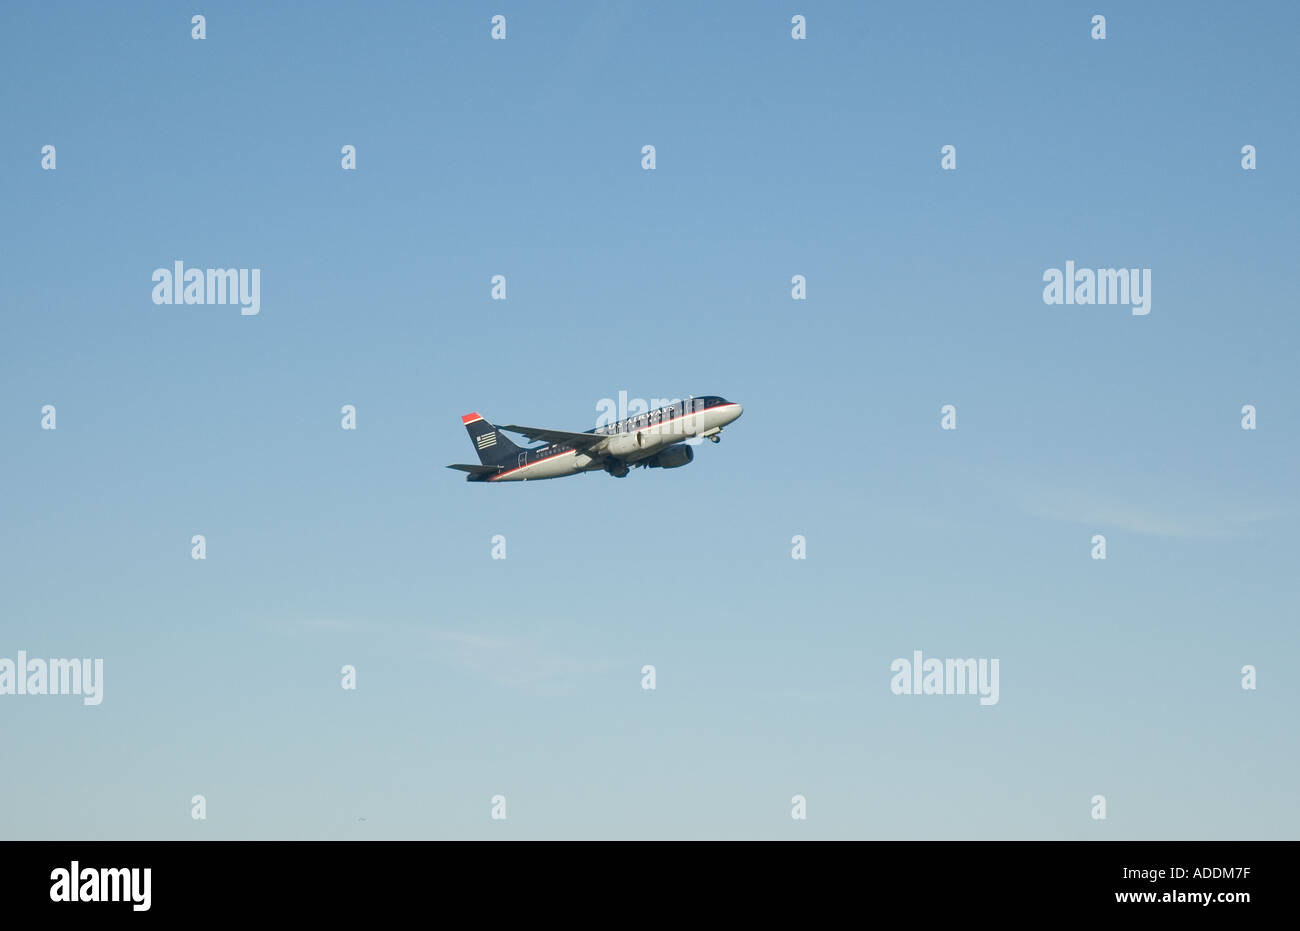 A US Airways passenger jet taking off from Logan International Airport in Boston Massachusetts Stock Photo